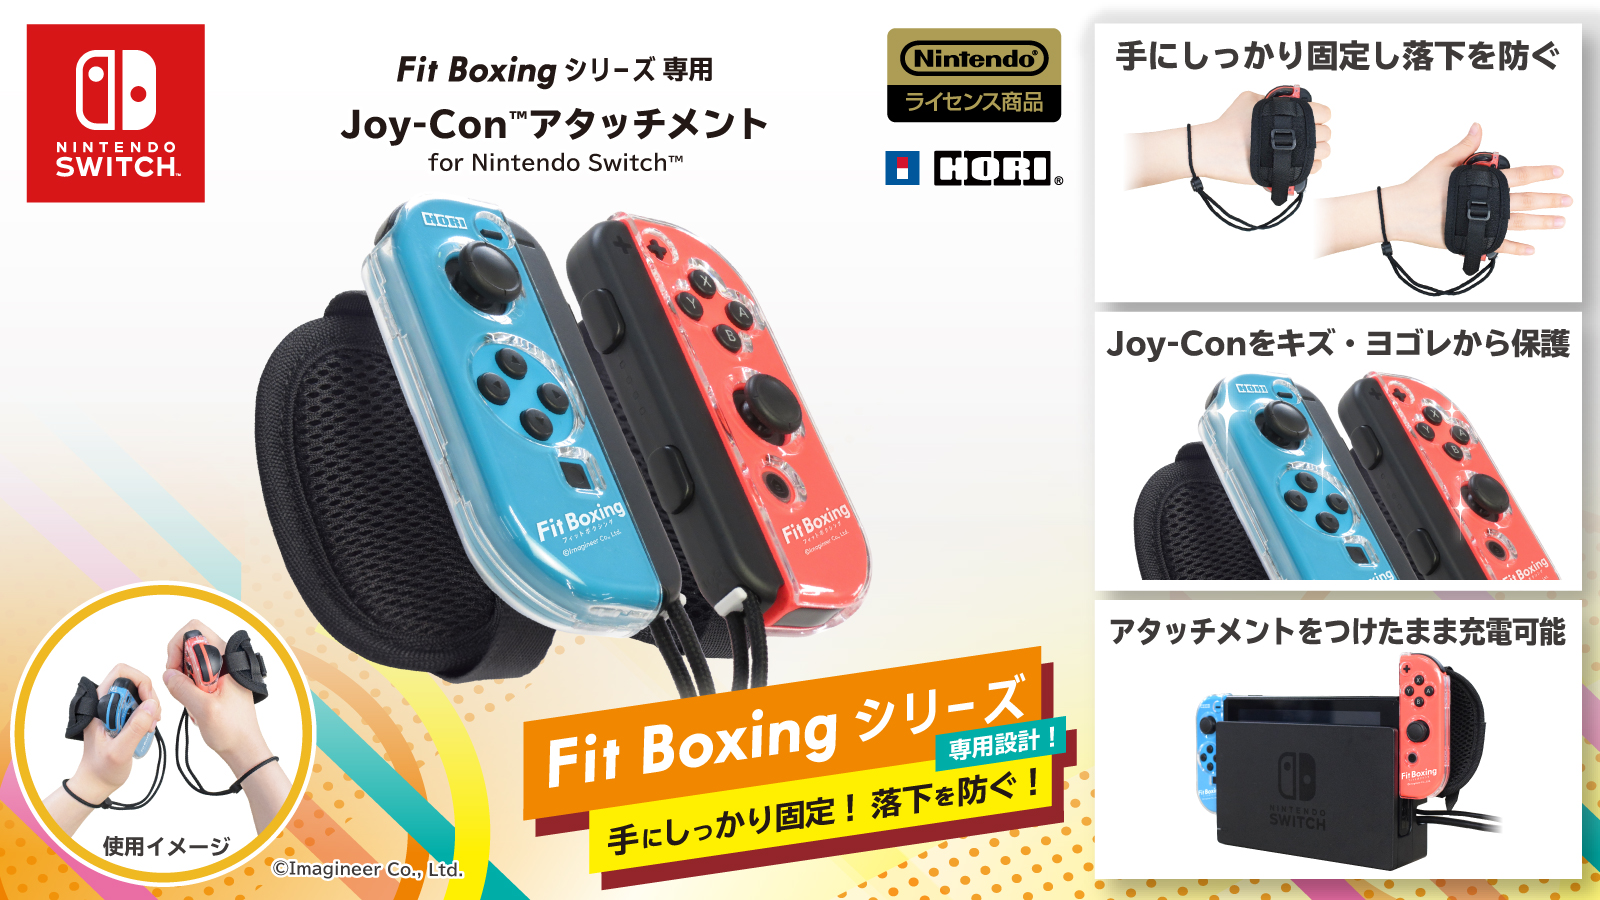 Fit Boxing2 joy-con 1